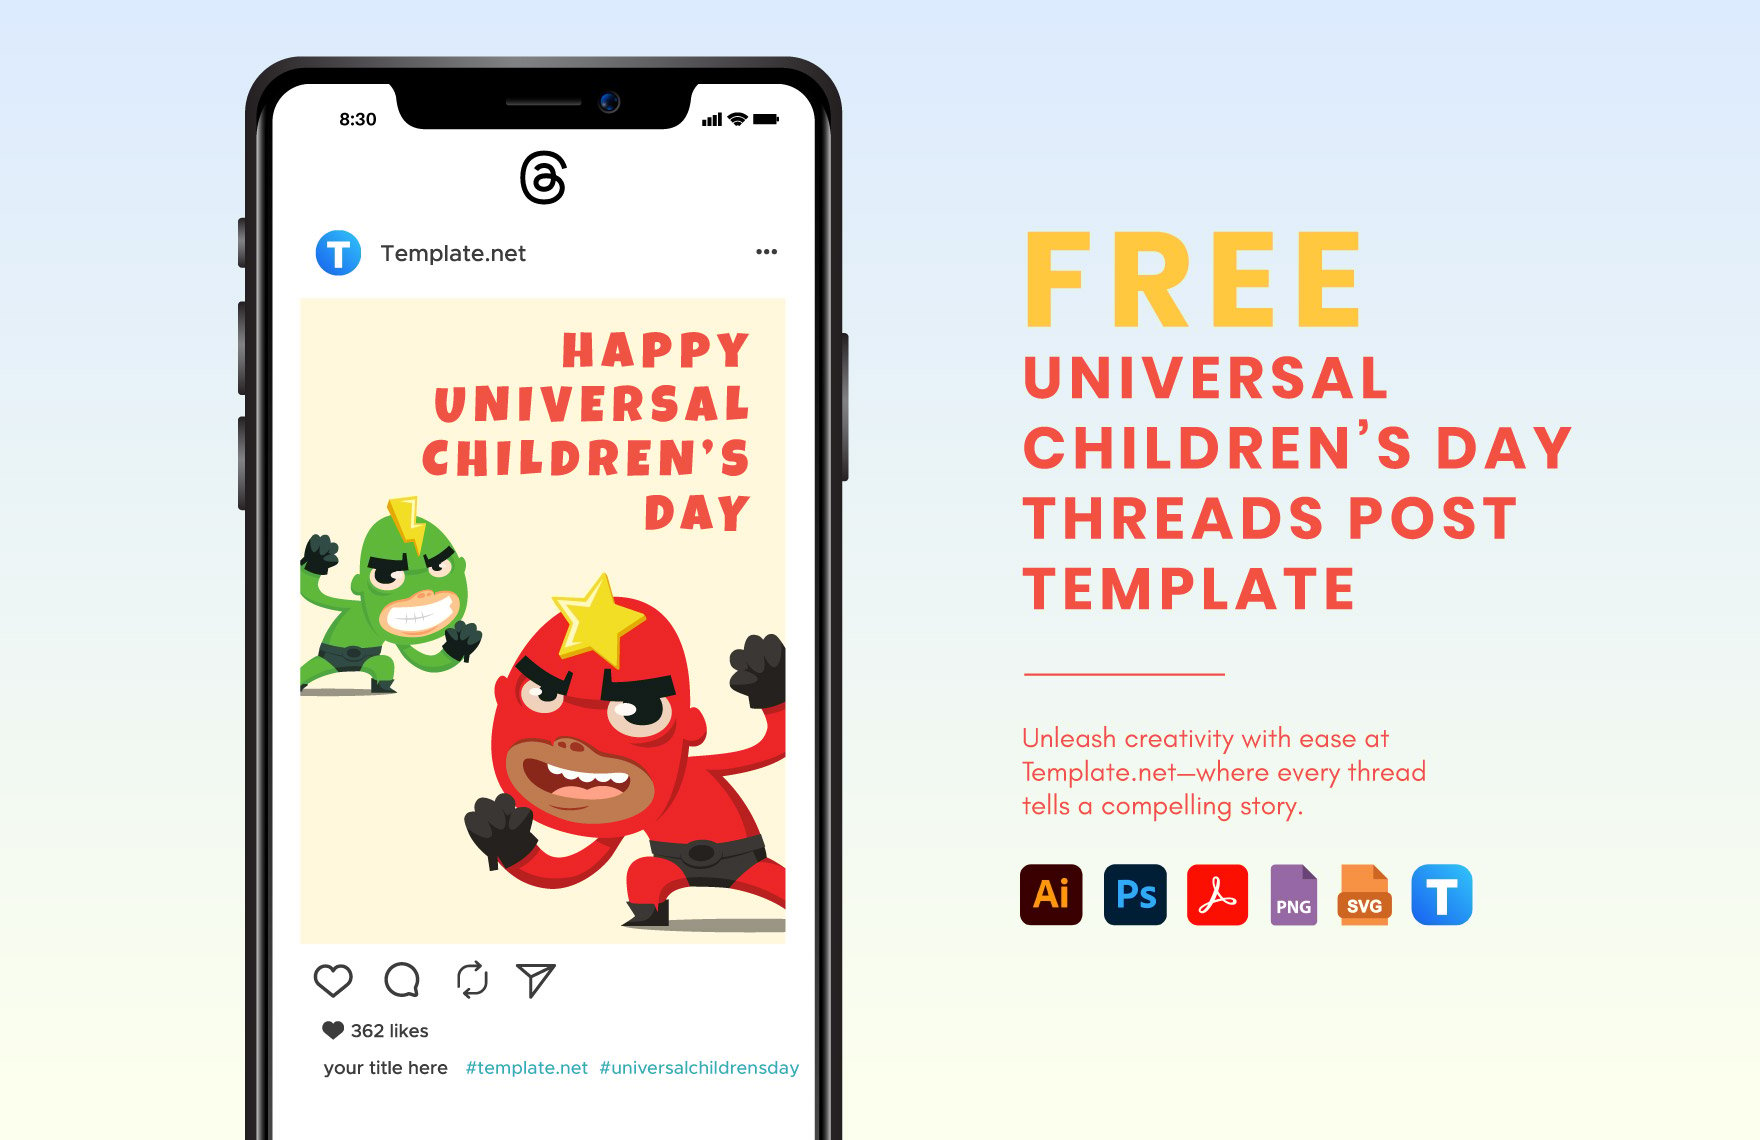 Universal Children’s Day Threads Post Template